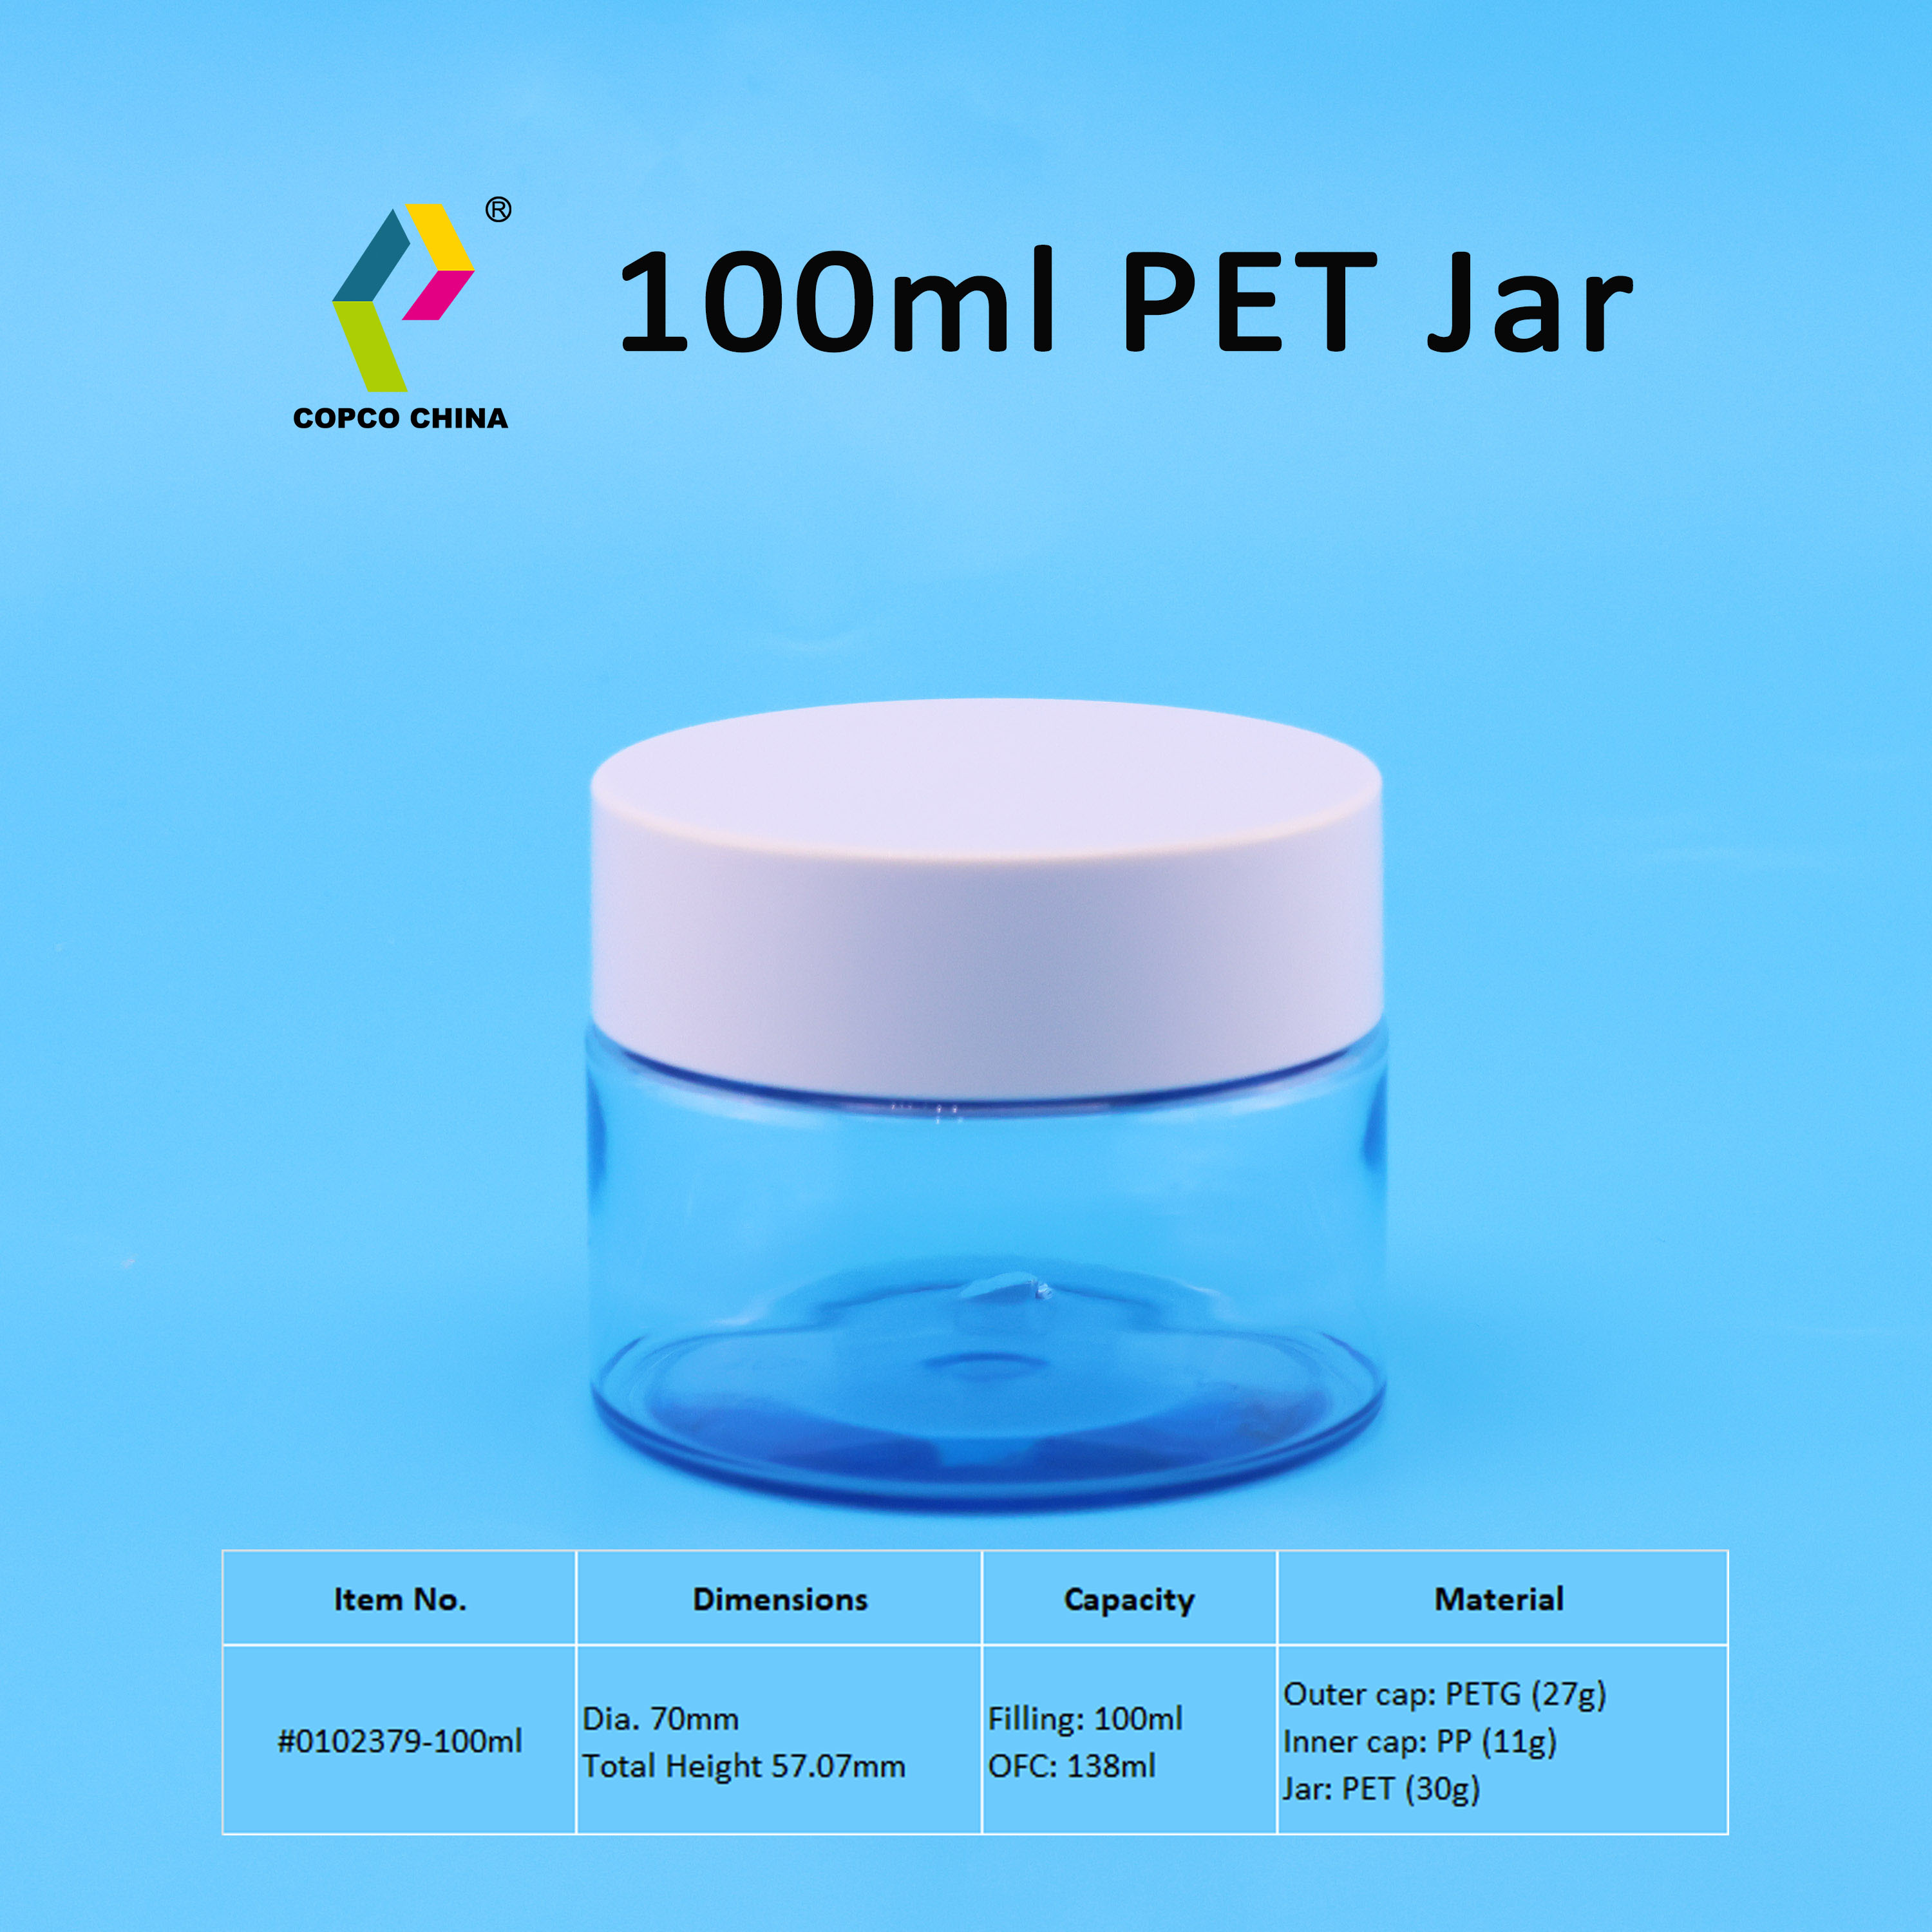 #0102379-100ml PET Jar.jpg